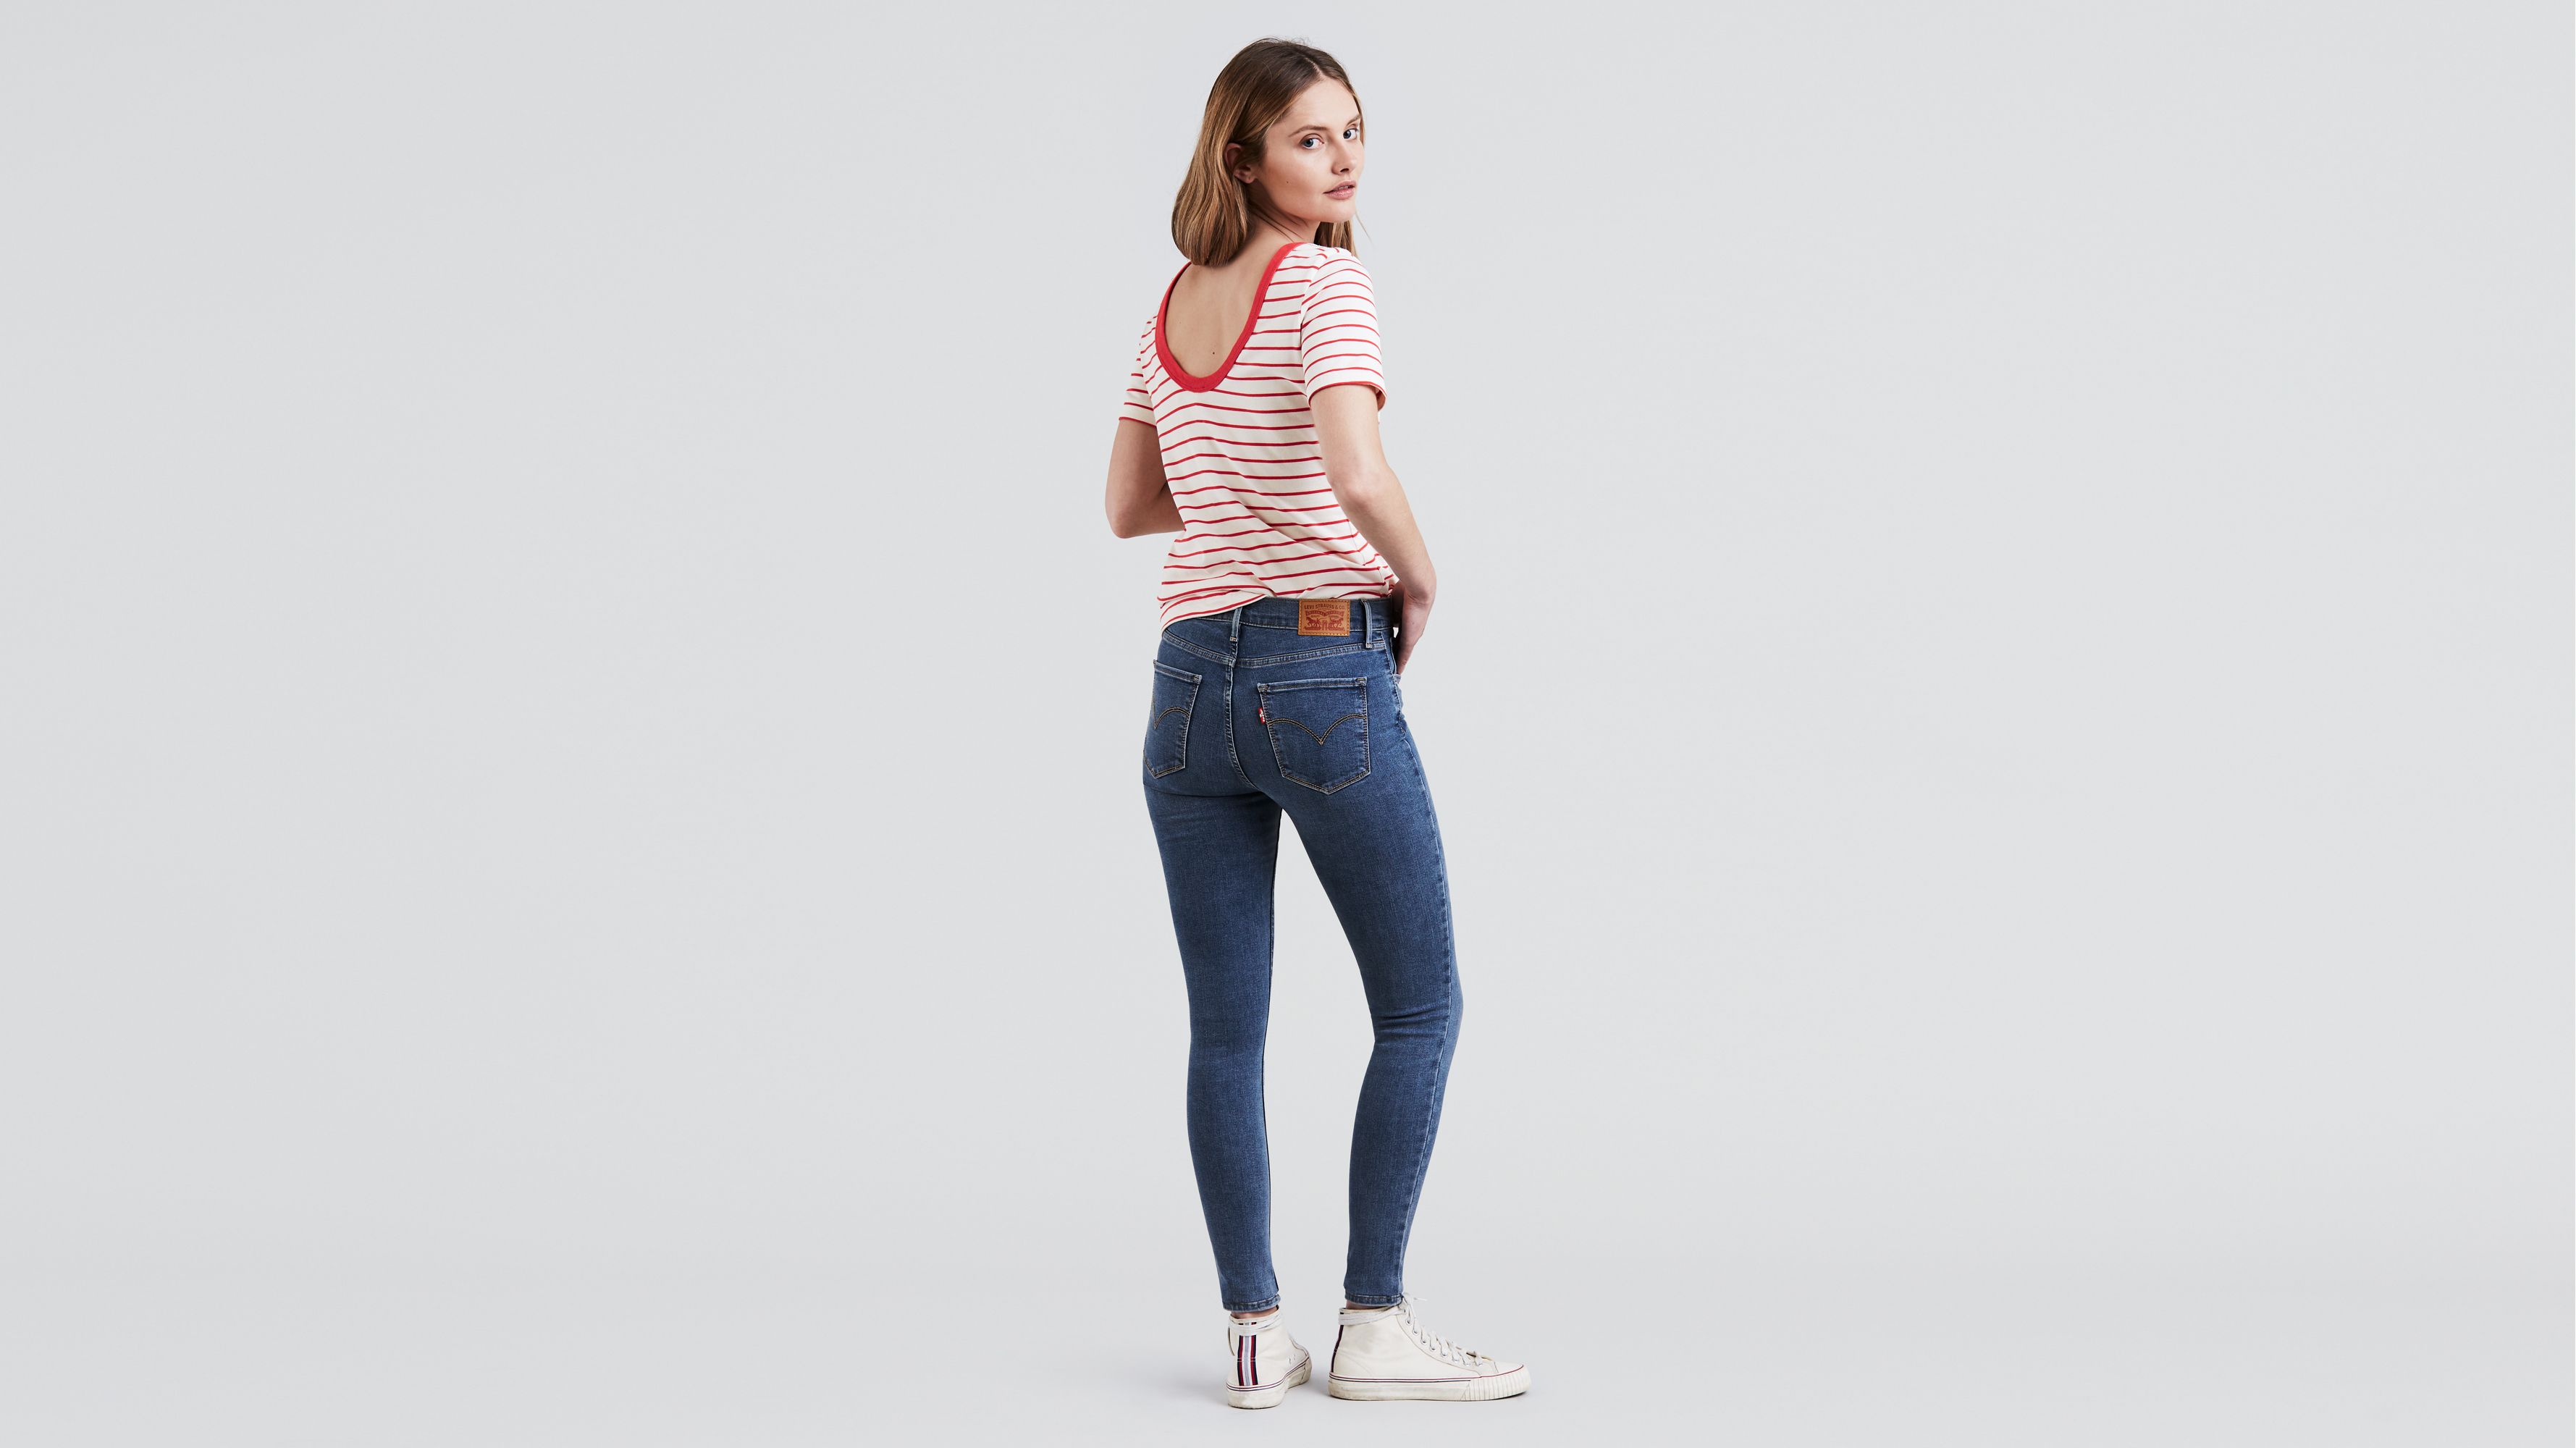 levi's 720 women's jeans